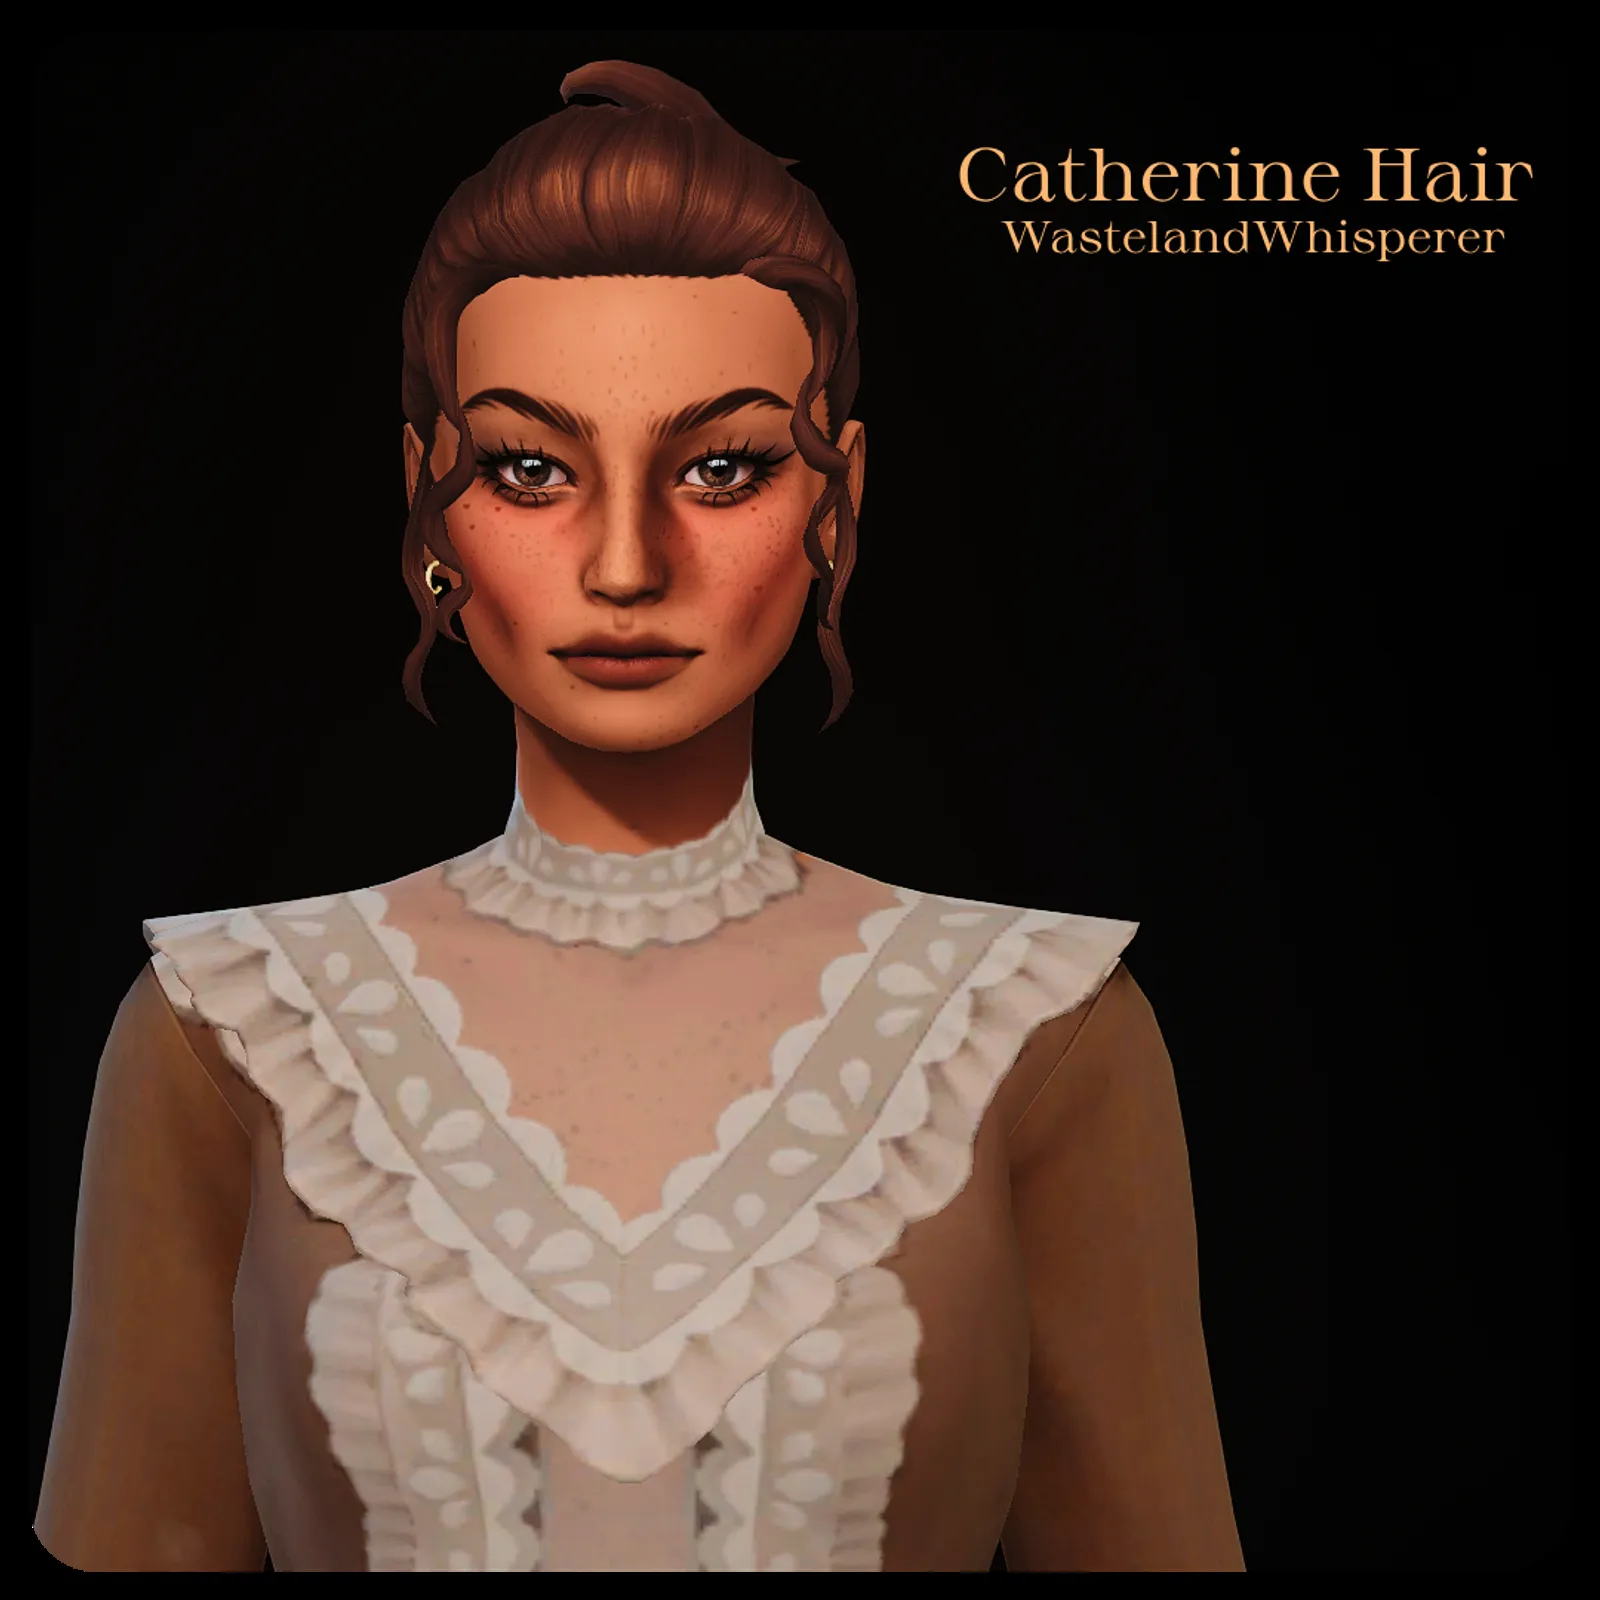 Catherine Hair